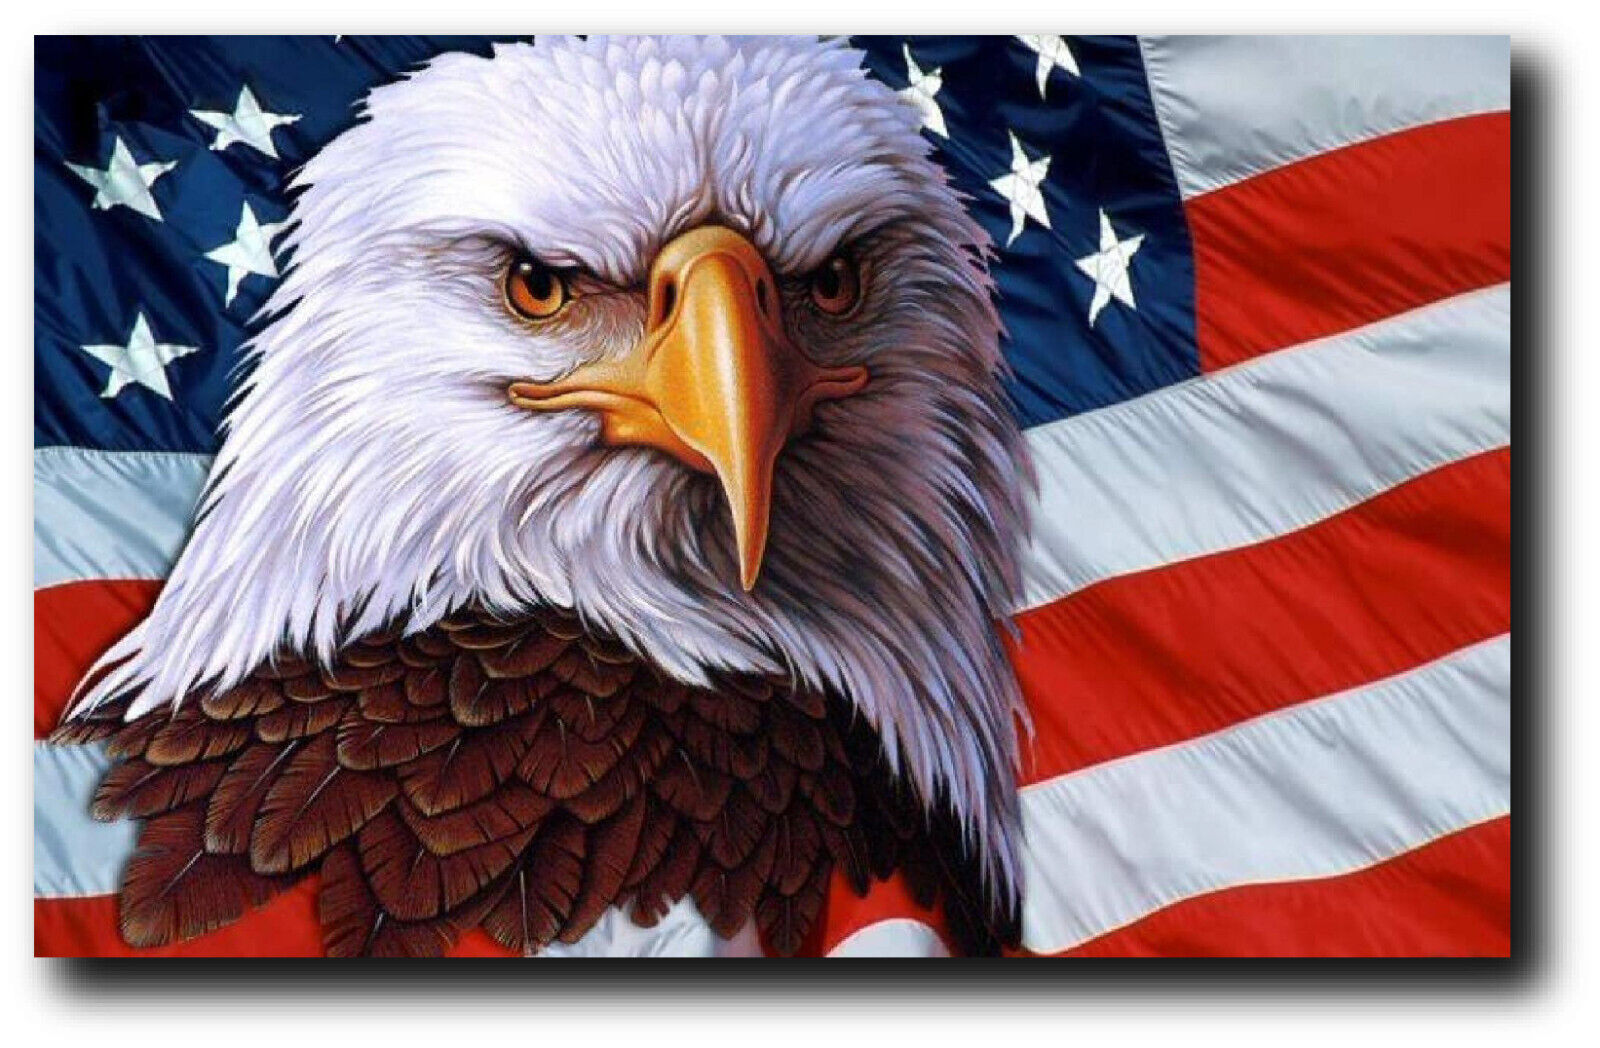 BALD EAGLE AMERICAN FLAG DECAL STICKER 3M US TRUCK HELMET VEHICLE WINDOW WALL